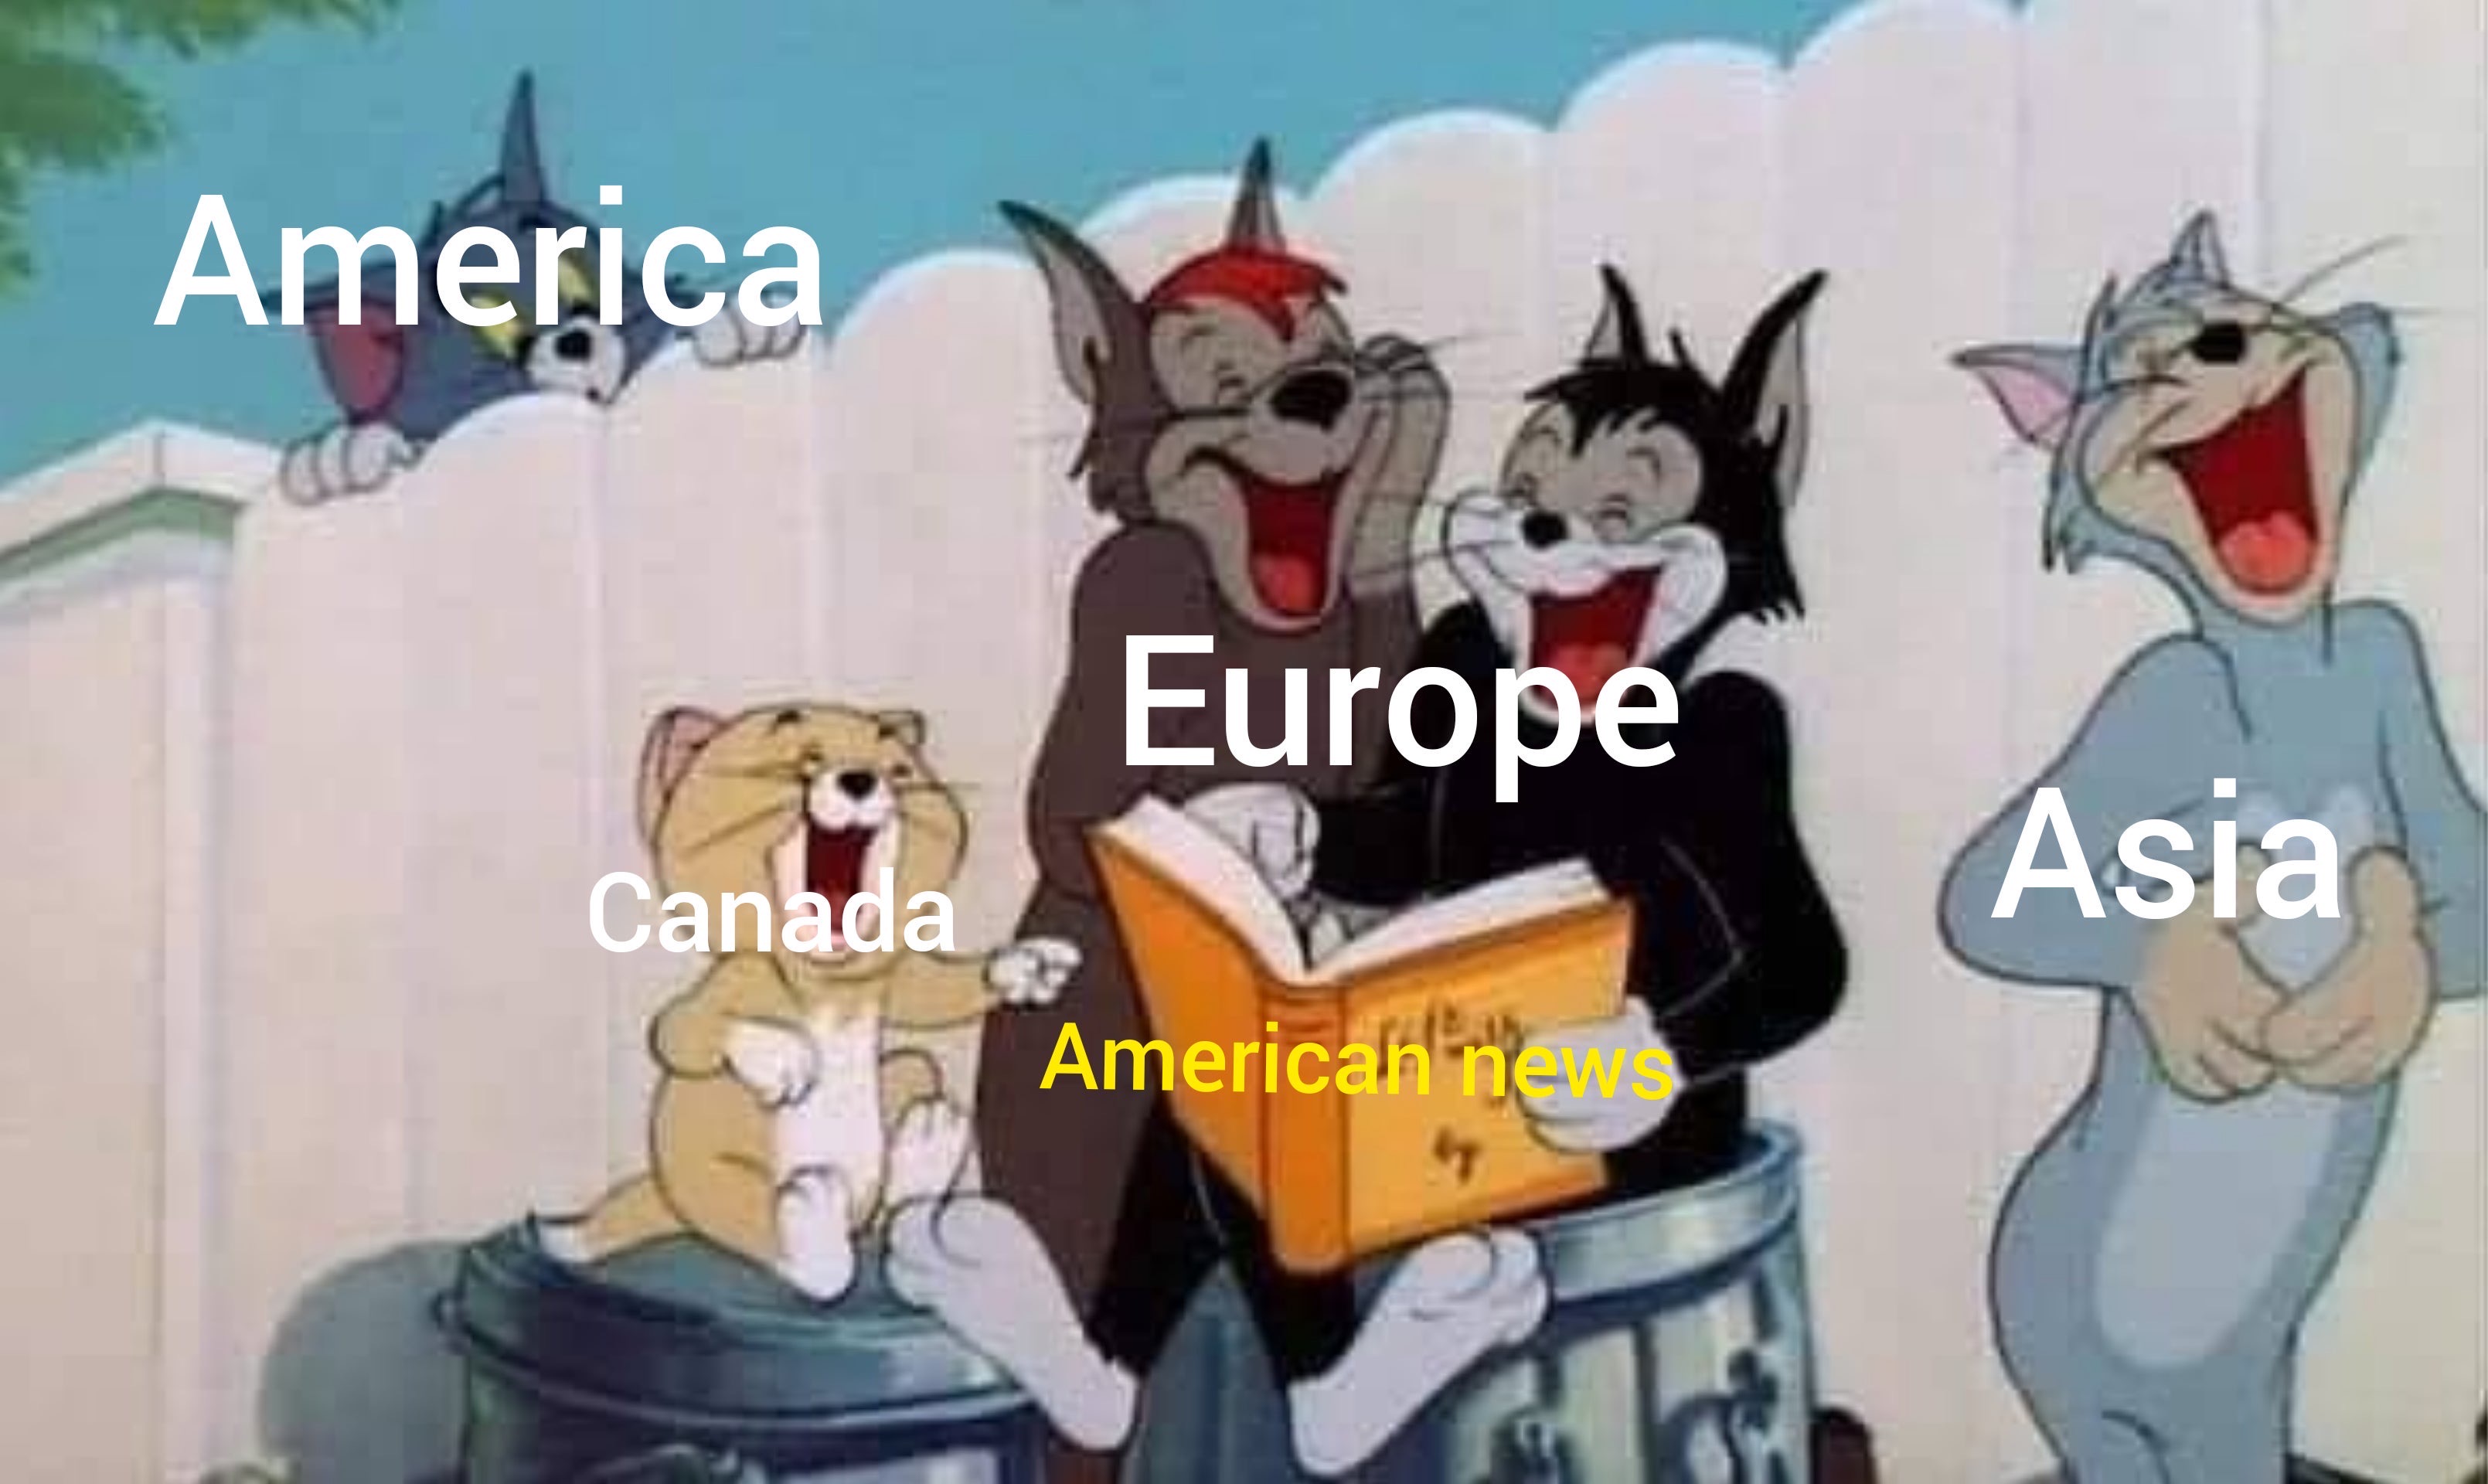 dank memes - tom and jerry meme template - America Europe Asia Canada American news